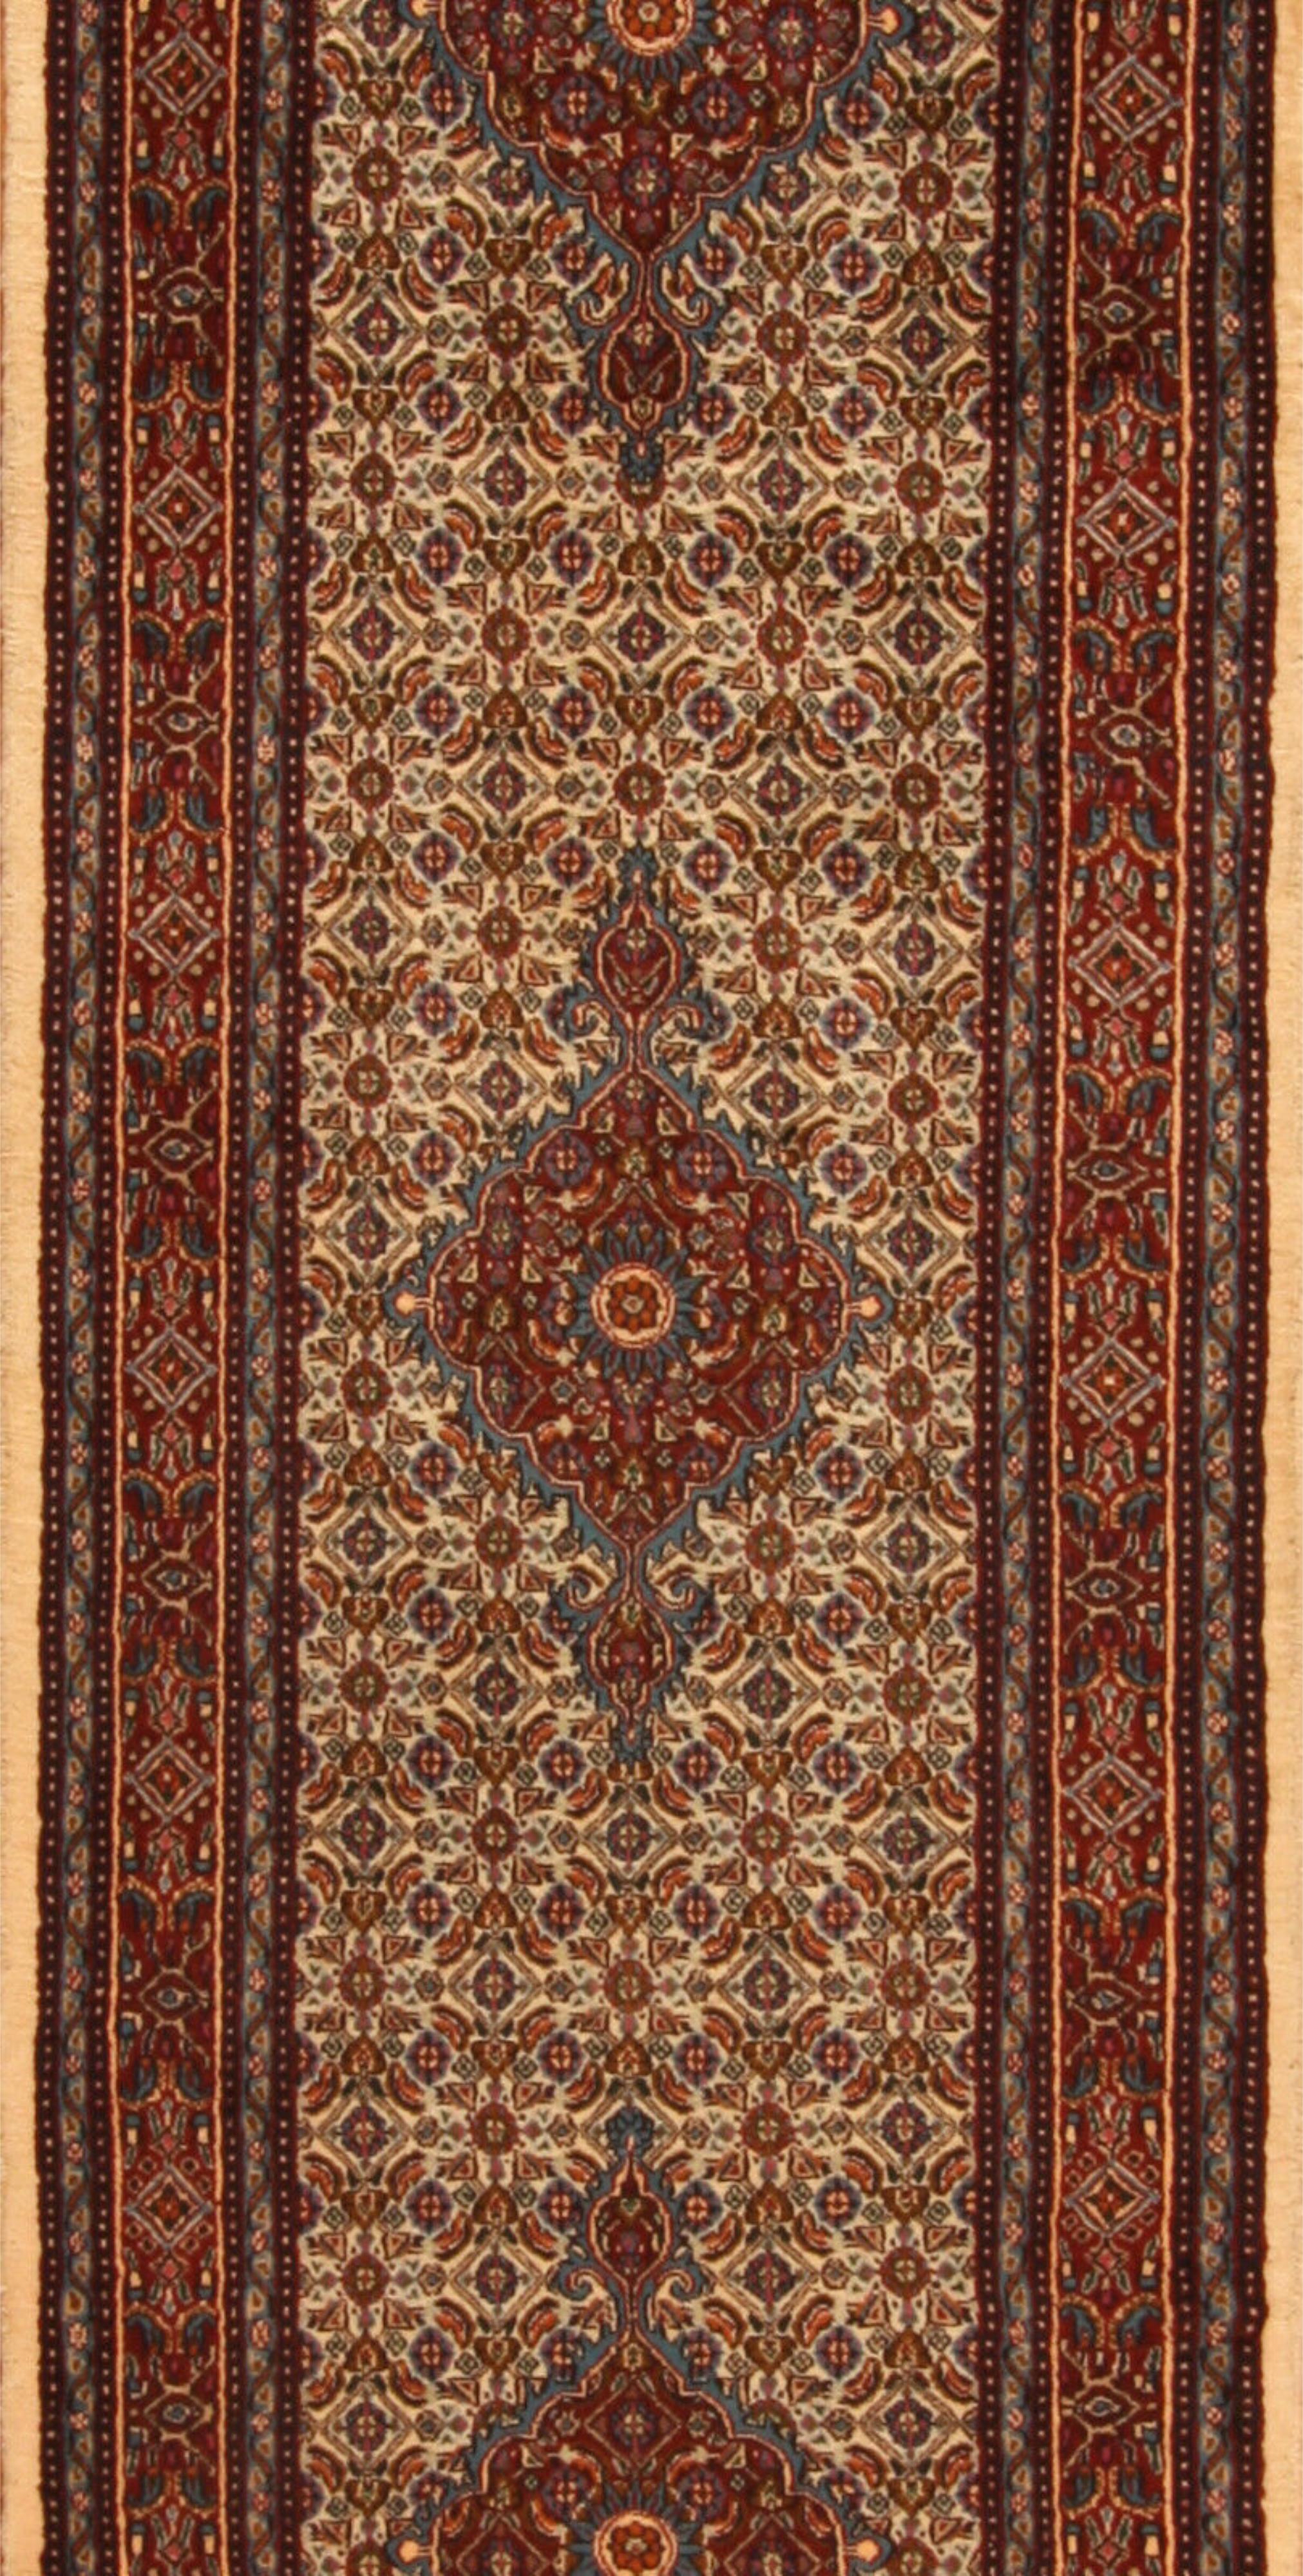 Wool Handmade Vintage Persian Style Moud Runner Rug 2.6' x 9.6', 1980s - 1T51 For Sale